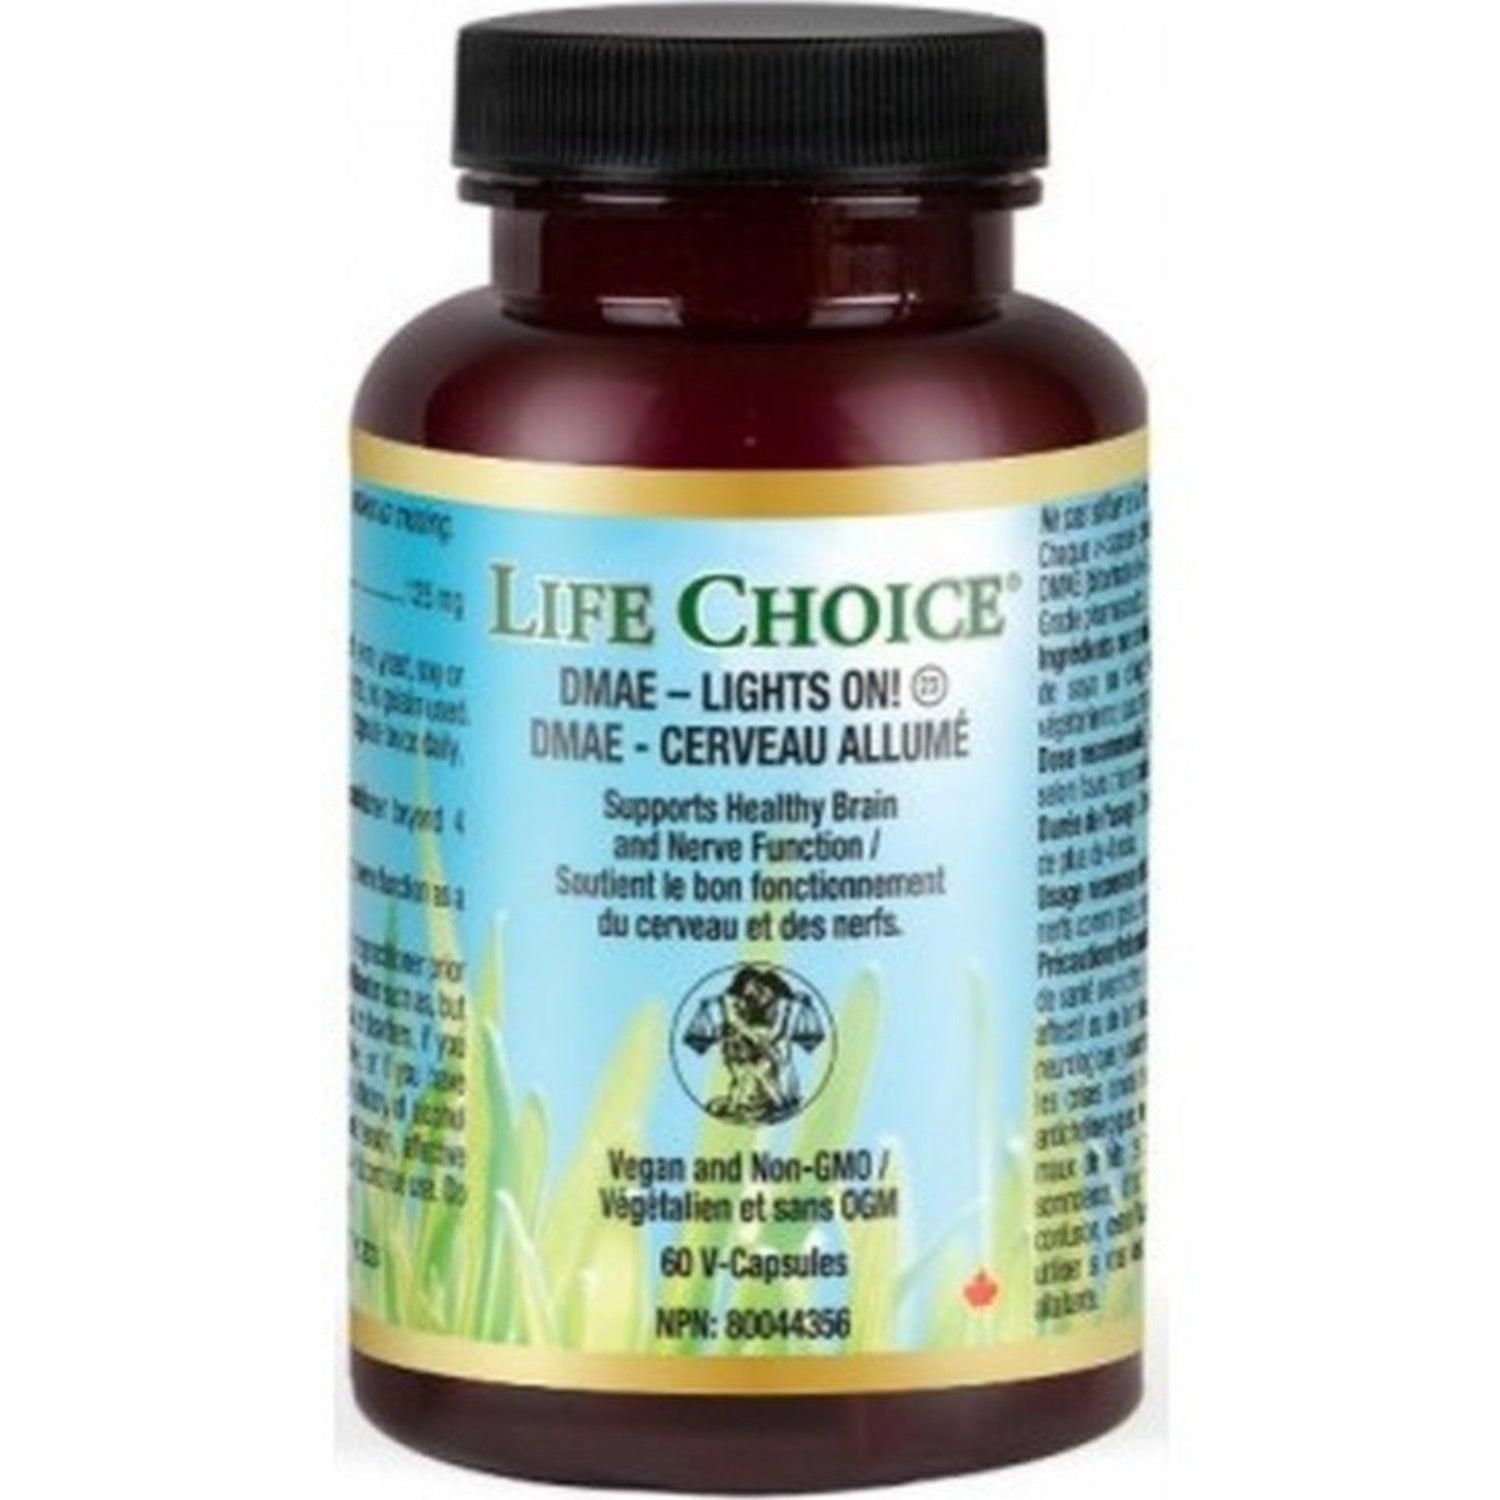 Life Choice DMAE - Lights On 60 V-Caps Supplements at Village Vitamin Store